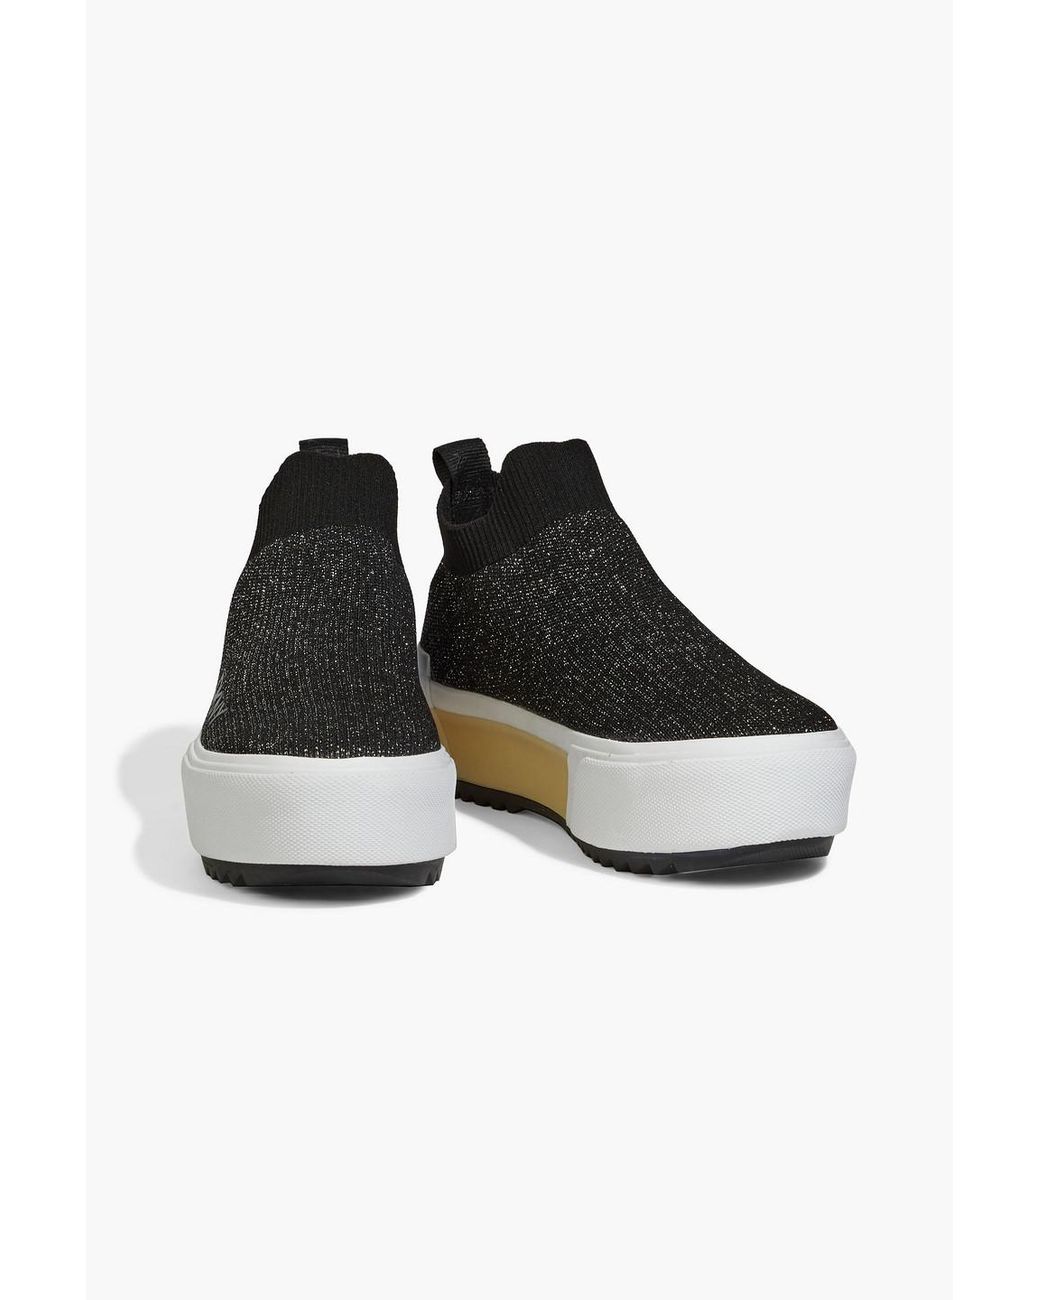 DKNY Viven Metallic Stretch-knit Platform Slip-on Sneakers in Black | Lyst